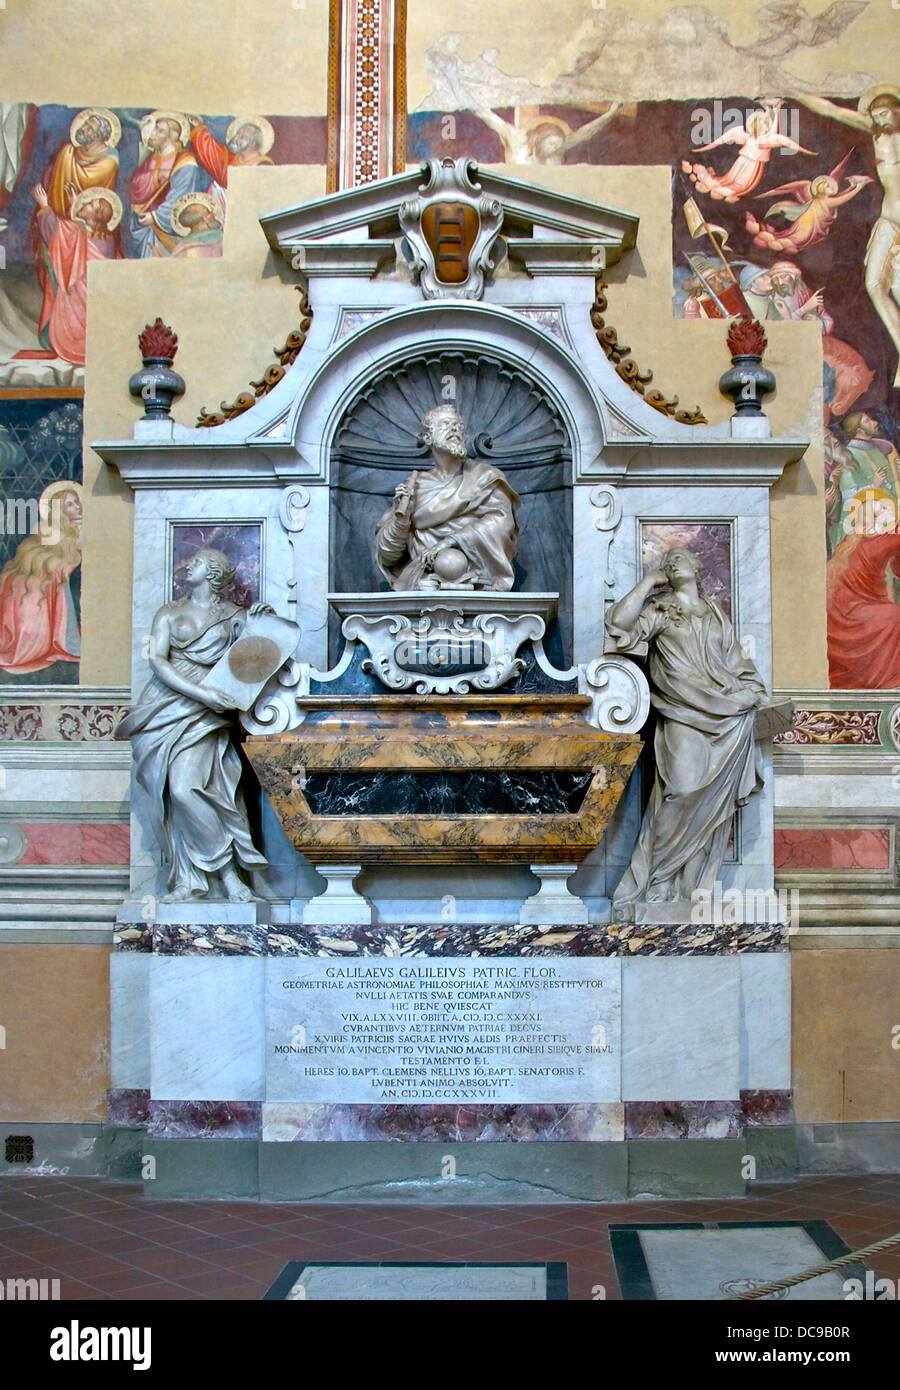 Galileo Galilei tombe de la Santa Croce (Sainte Croix) Basilique de Florence, Italie. Banque D'Images